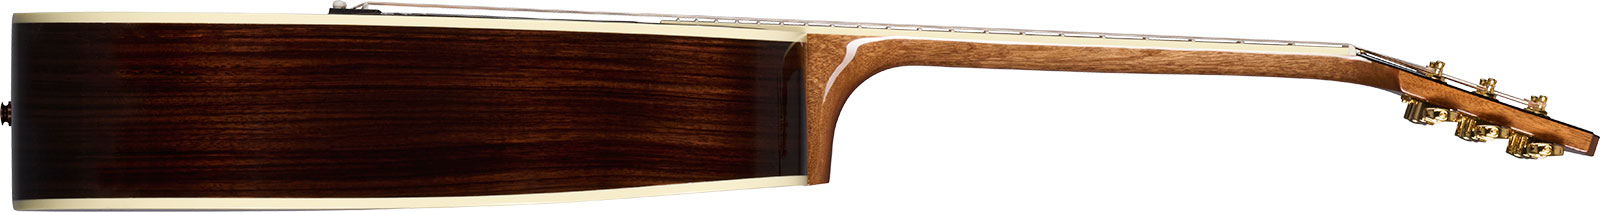 Gibson Hummingbird Standard Rosewood Dreadnought Epicea Acajou Rw - Rosewood Burst - Elektroakustische Gitarre - Variation 2